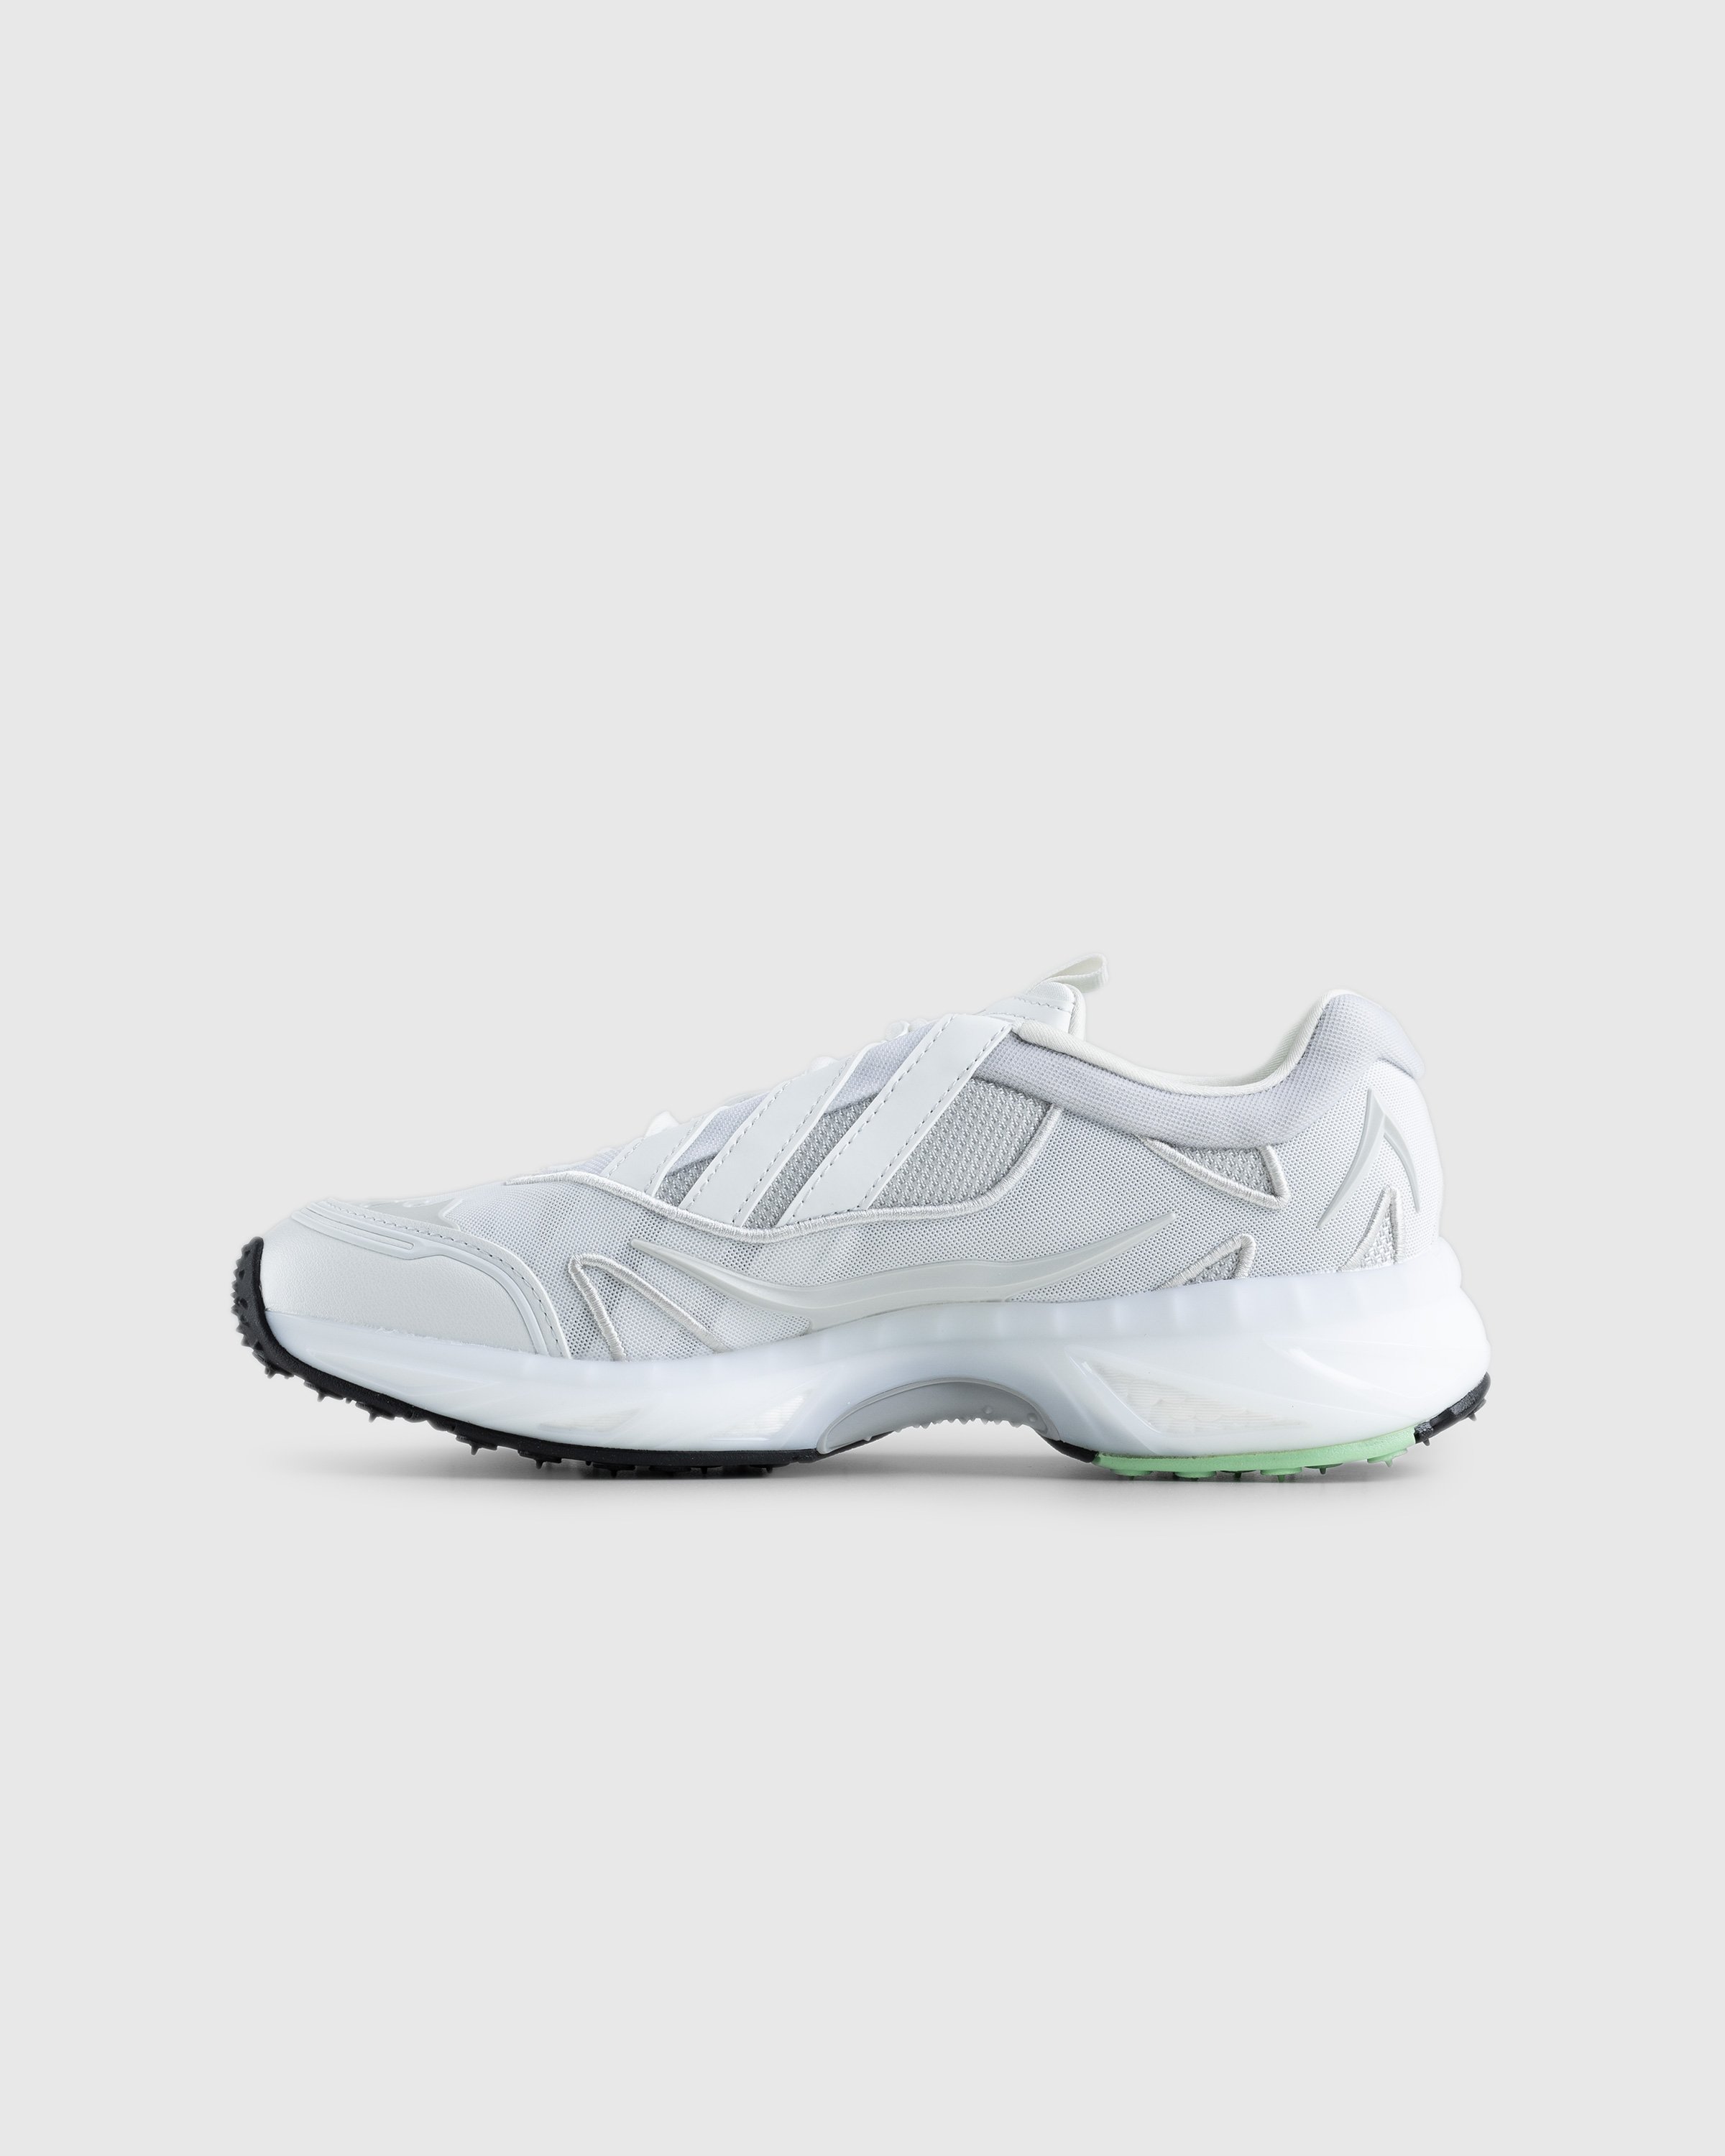 Adidas - Xare Boost White - Footwear - White - Image 2